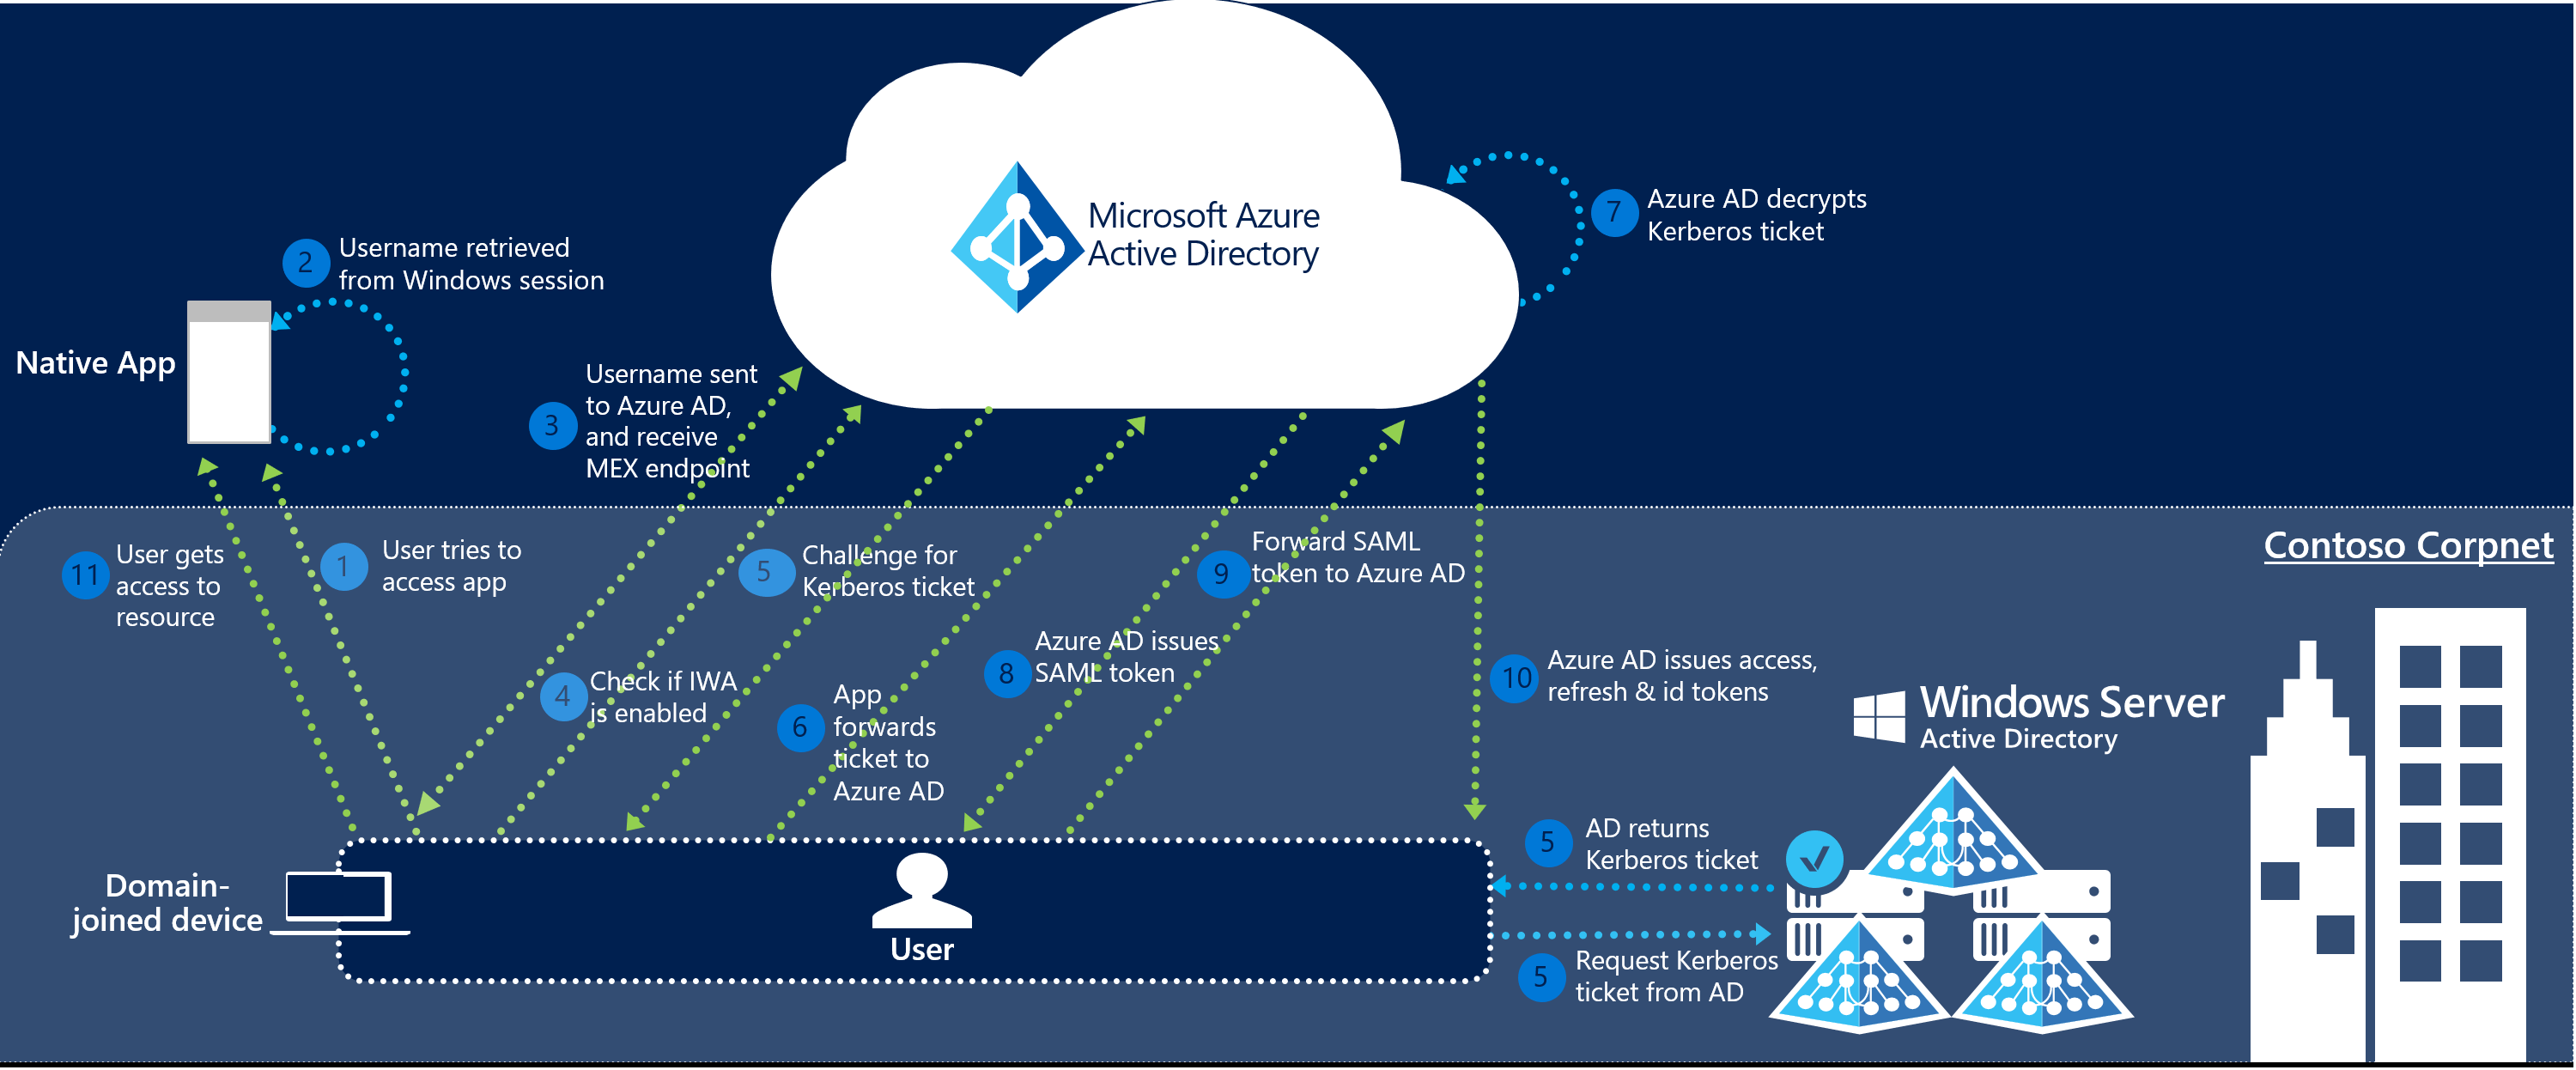 Request user get user. Microsoft Azure. Microsoft Active Directory. Microsoft Azure Active Directory. Структура Azure ad.